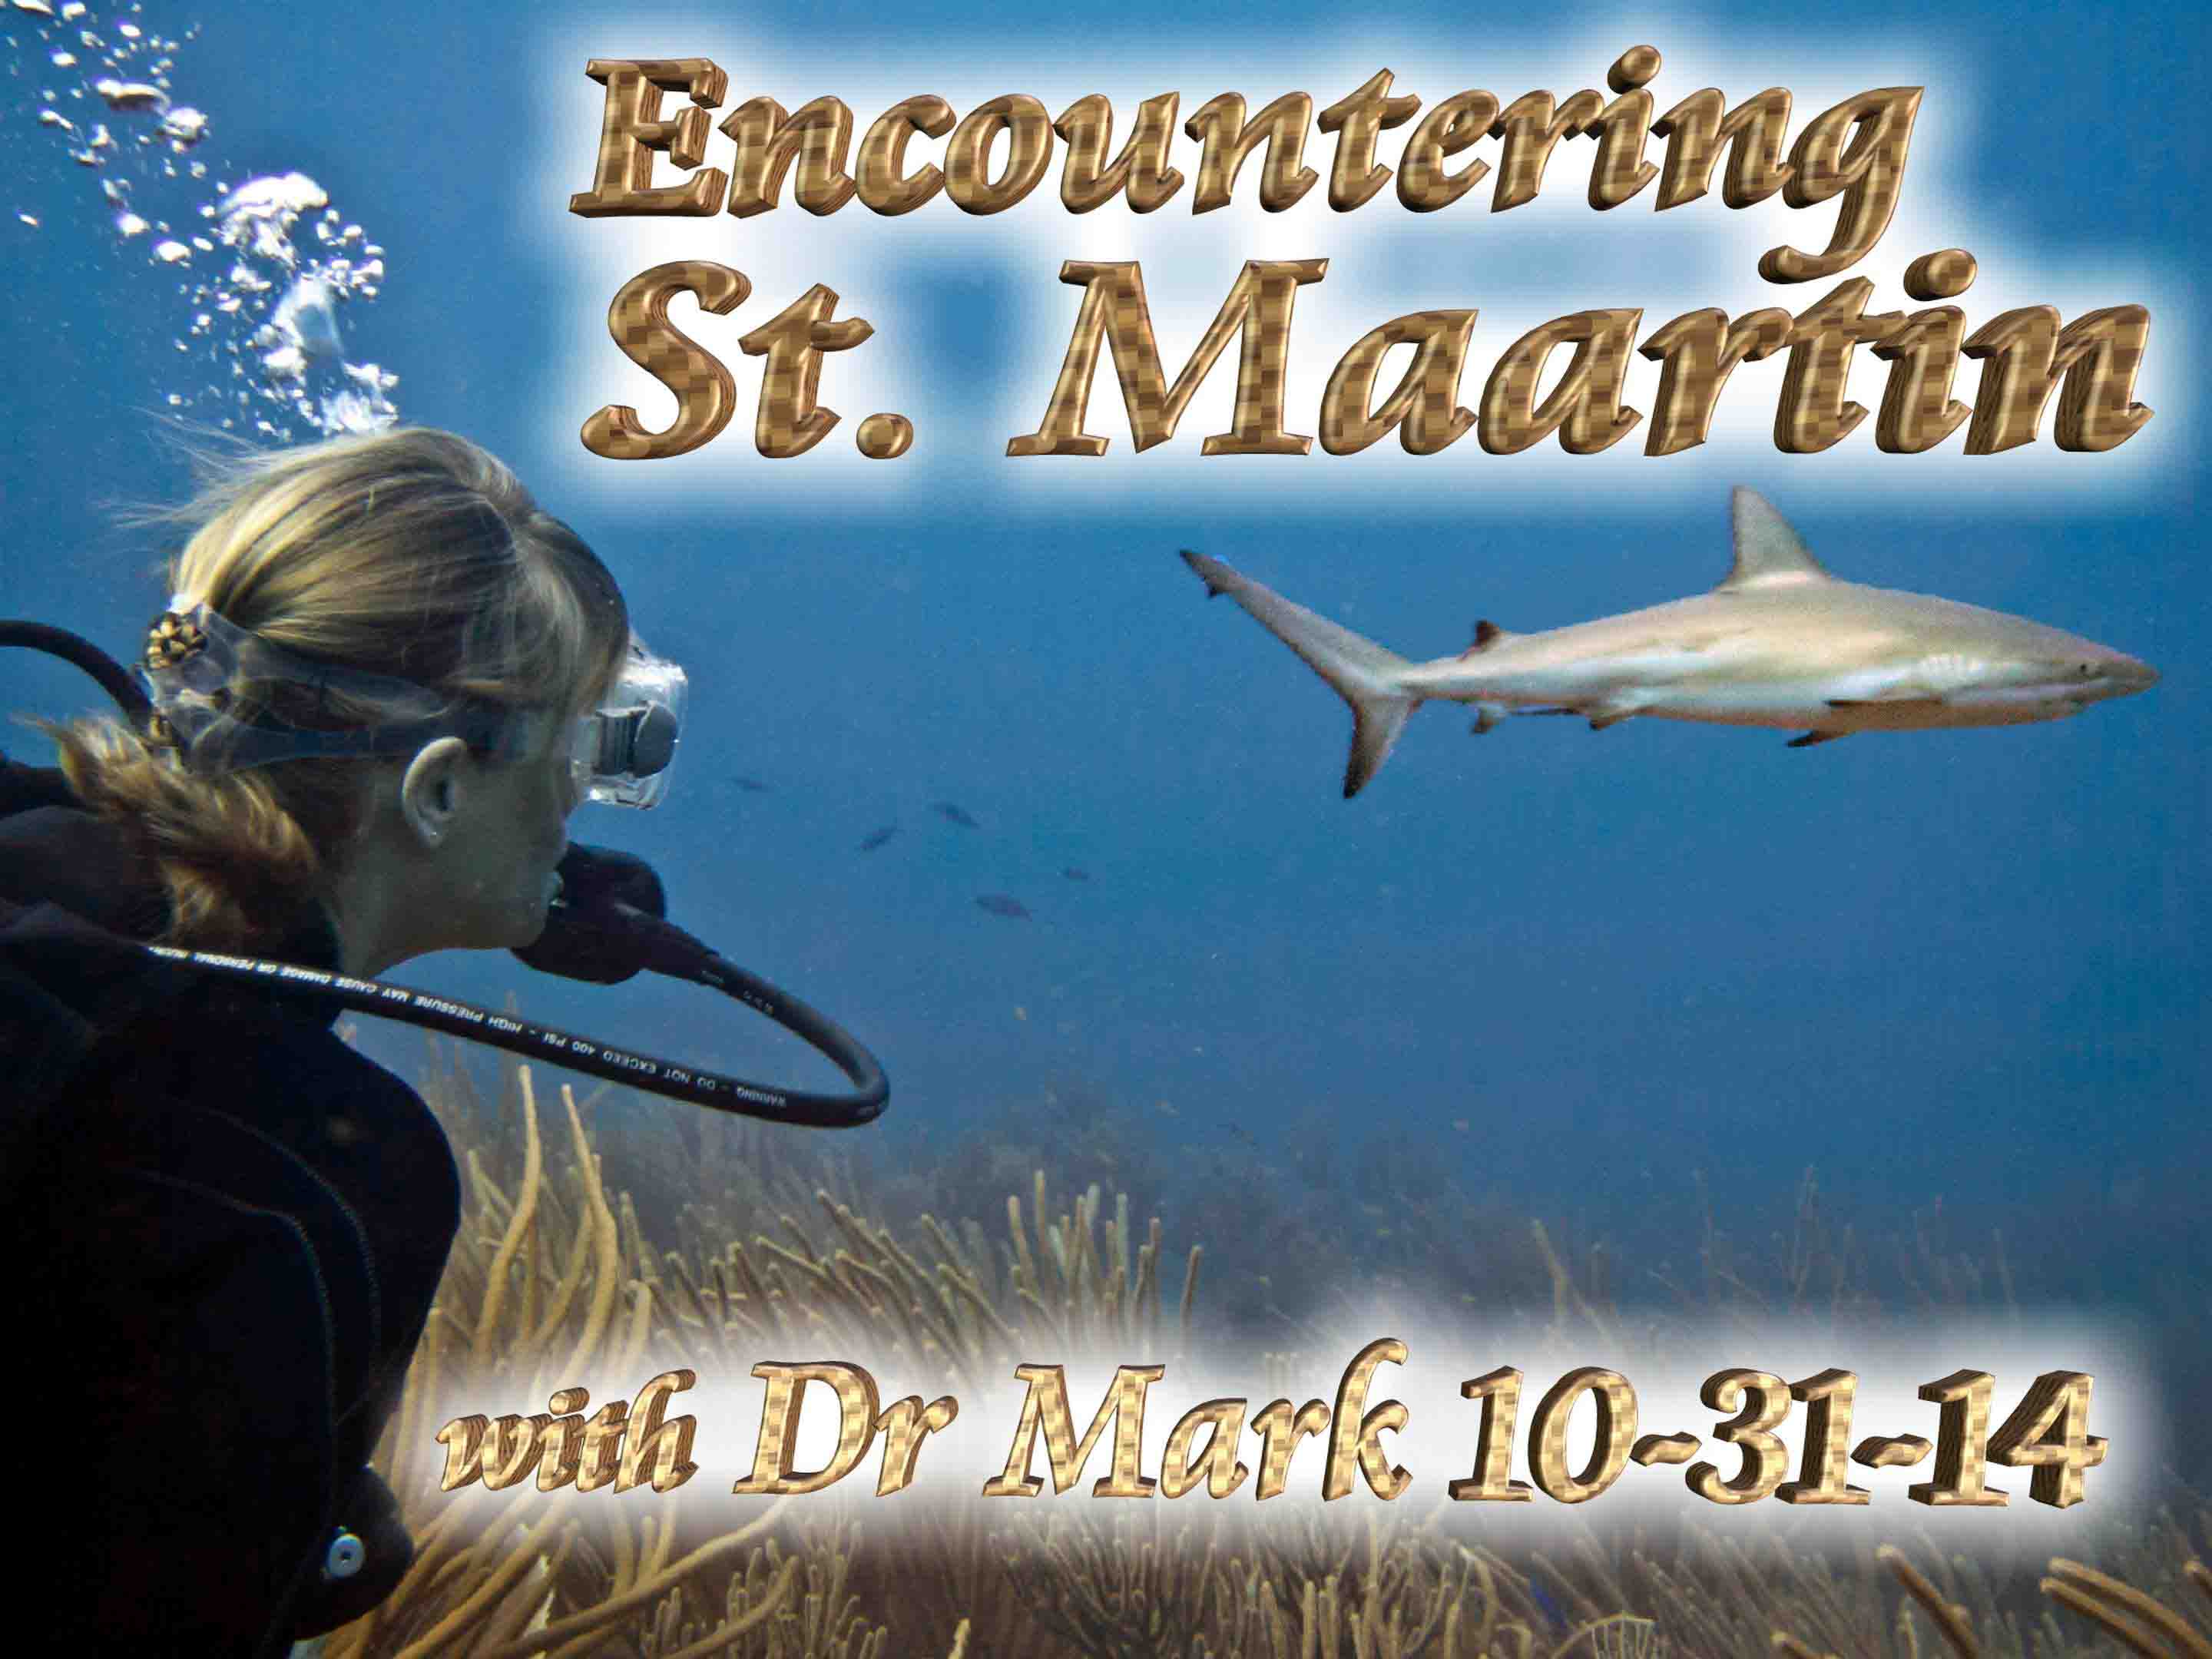 Encountering St Maartin 10-31-14